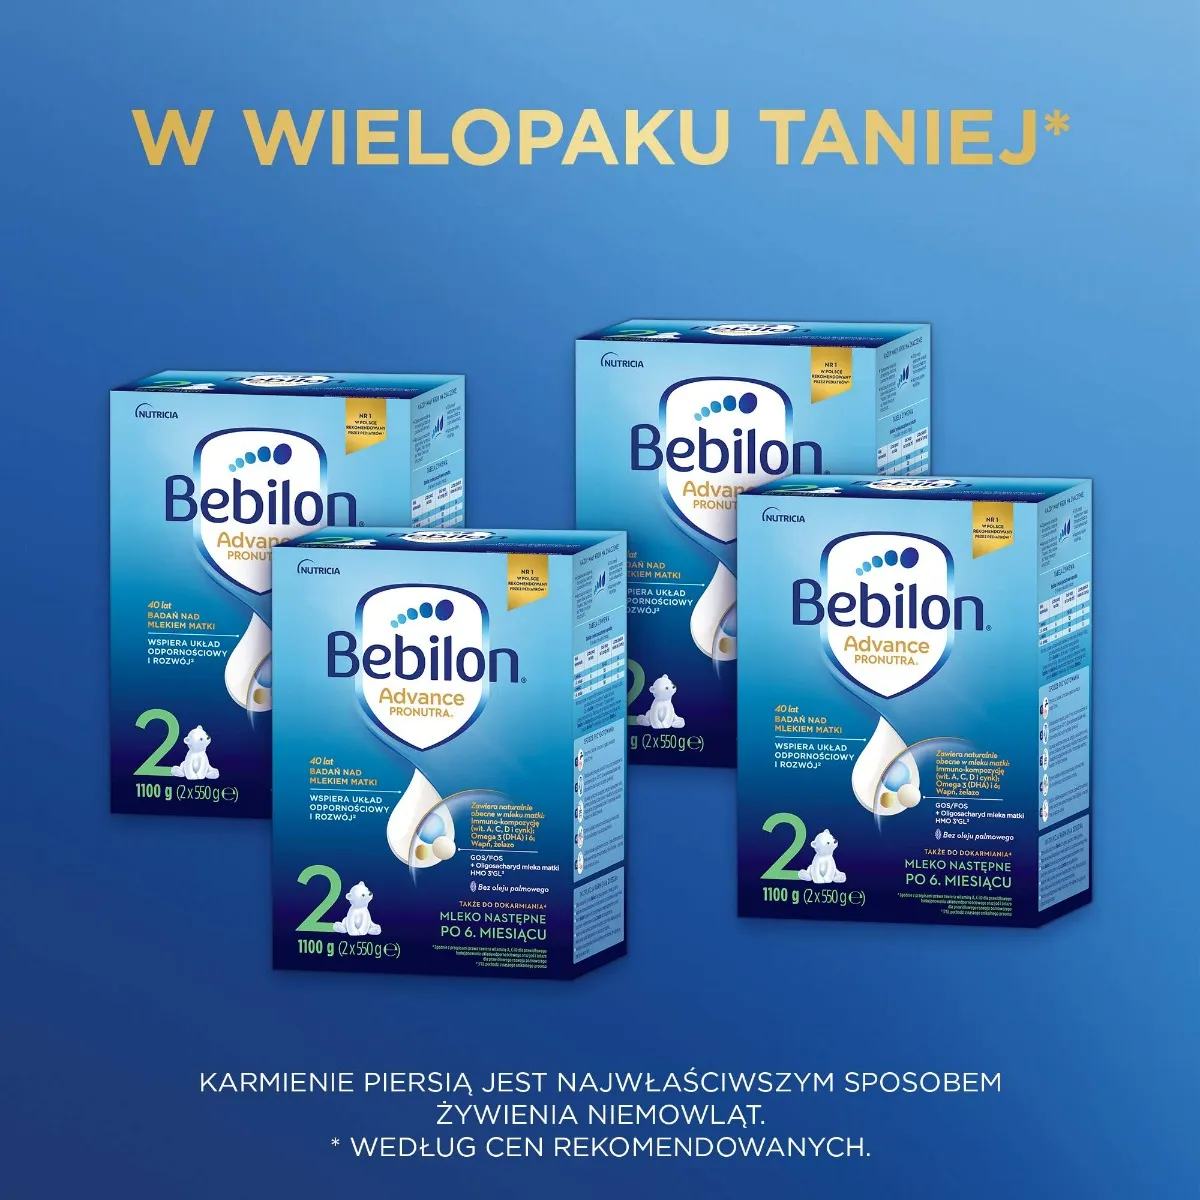 Bebilon 2 Pronutra-Advance, mleko następne po 6. miesiącu, 4 x 1100 g 